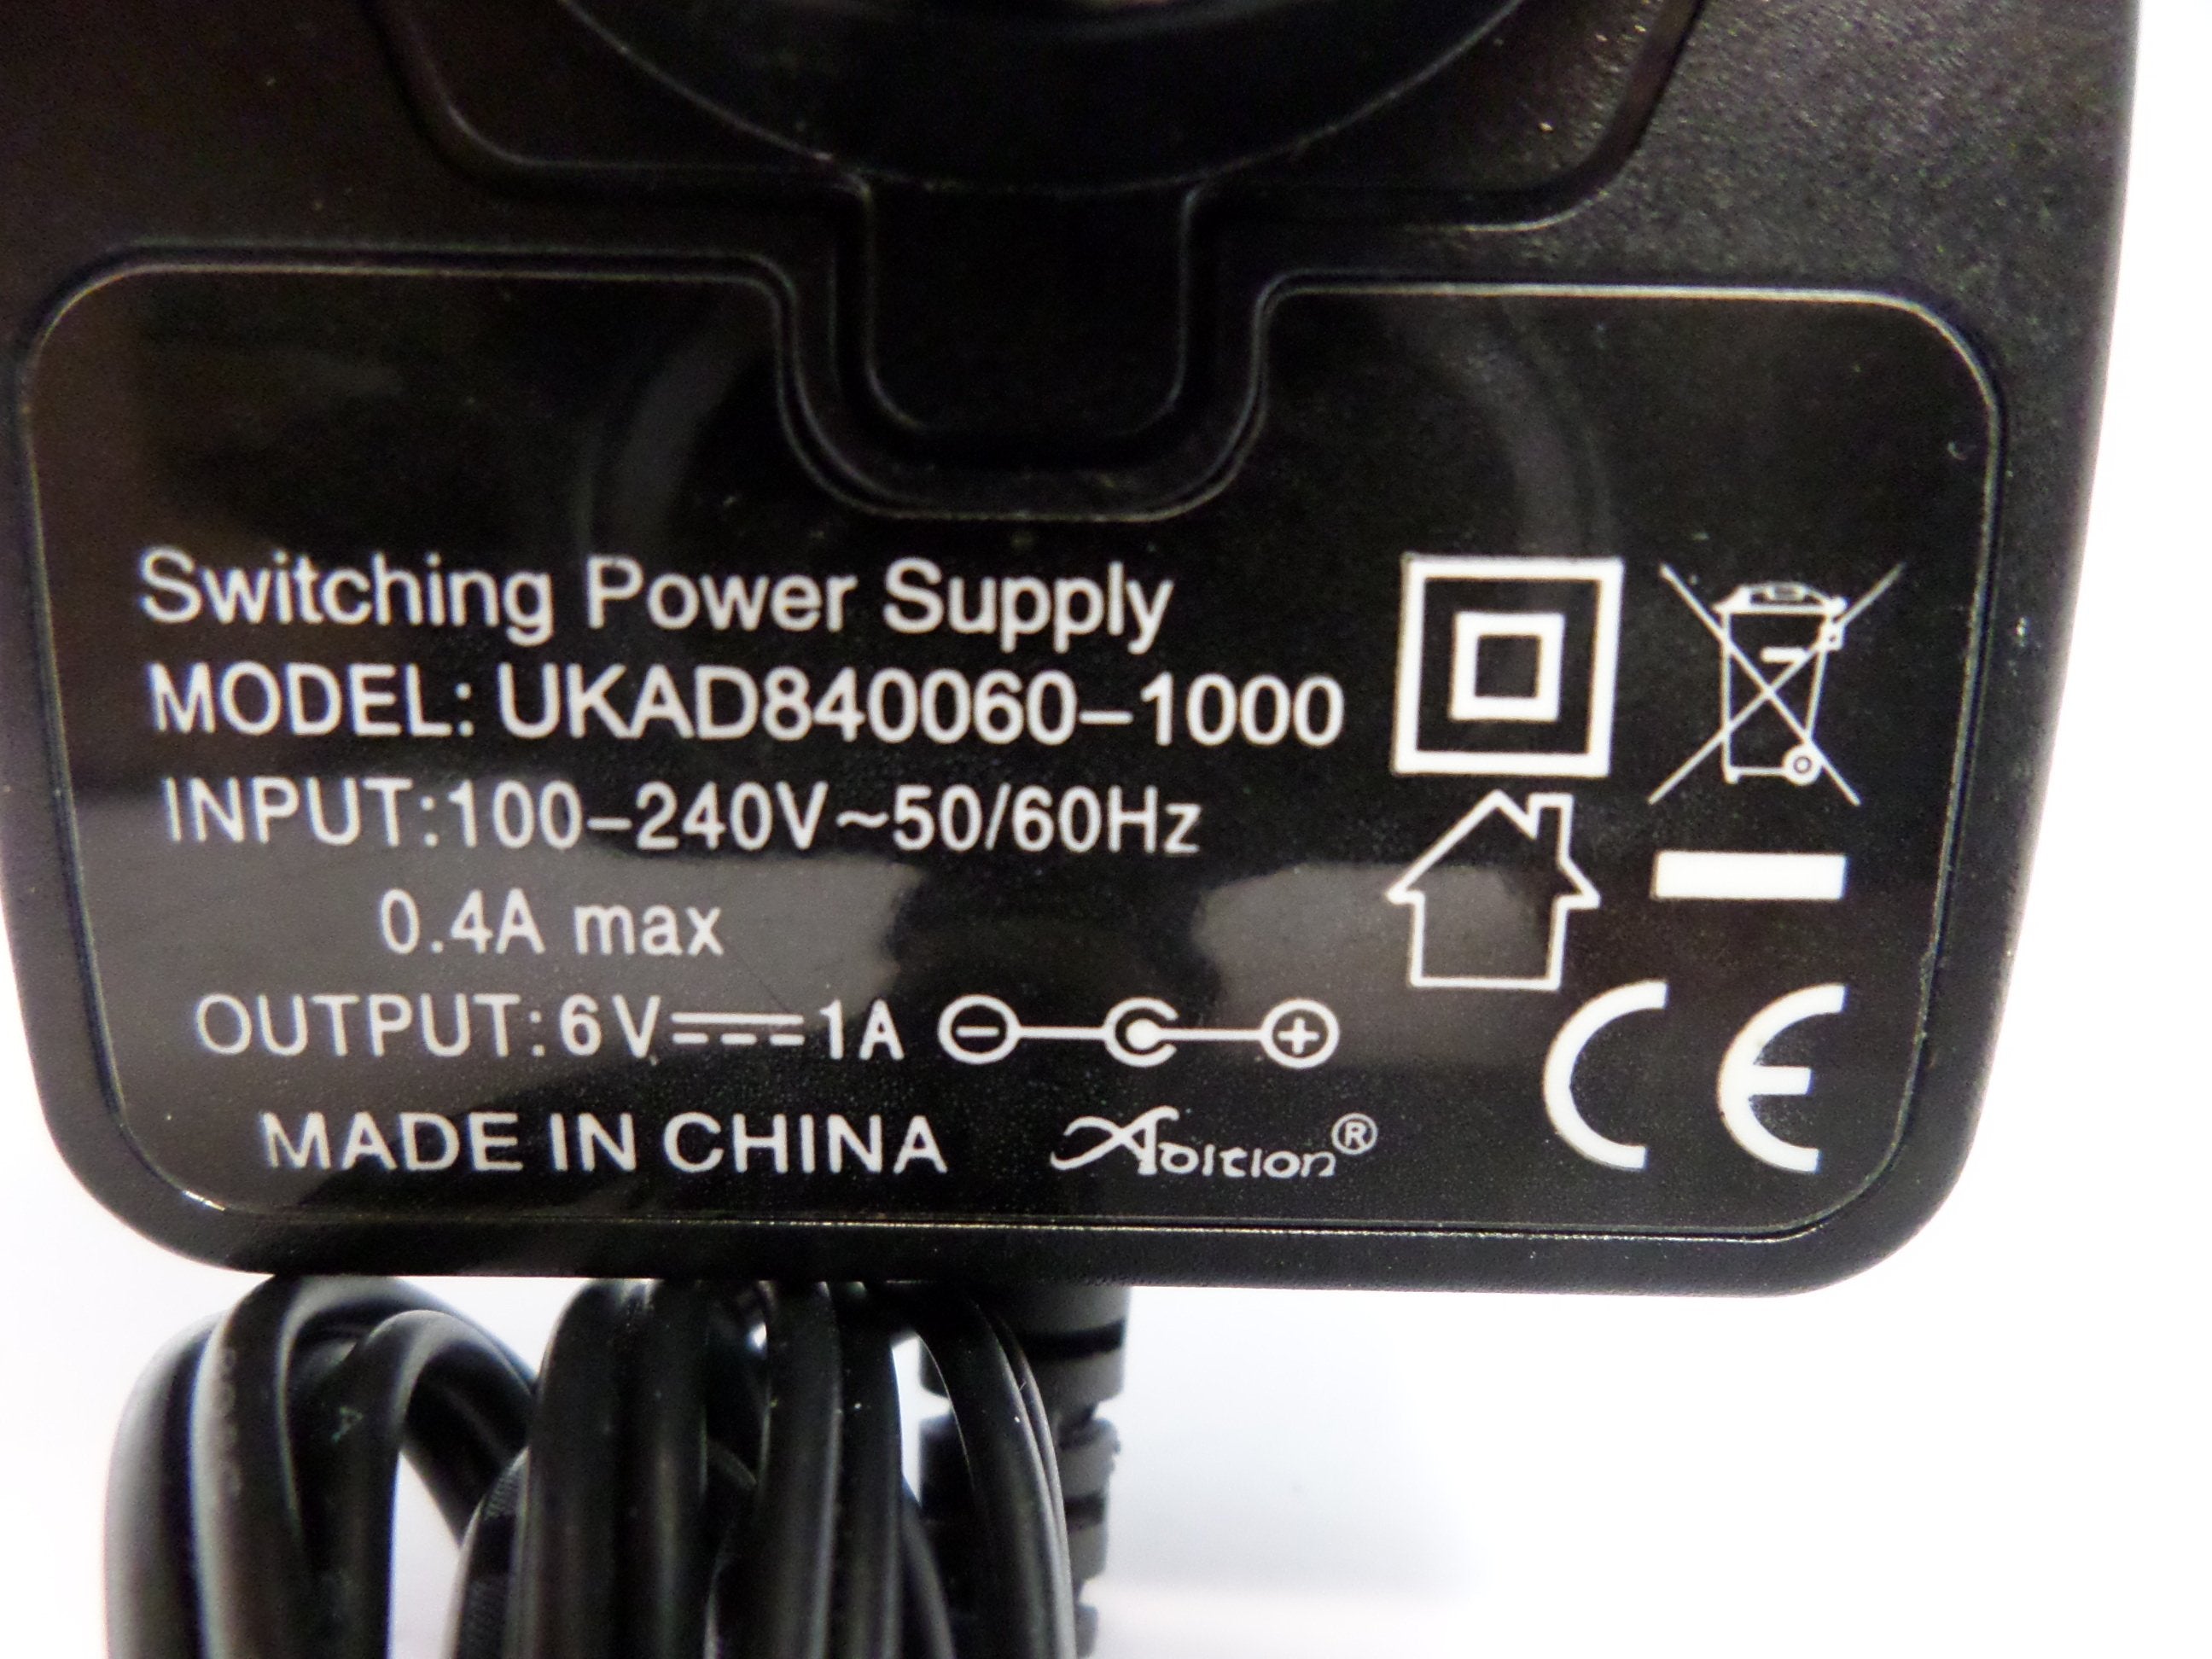 PR25797_UKAD840060-1000_Adition 6V Switching Power Supply - Image3